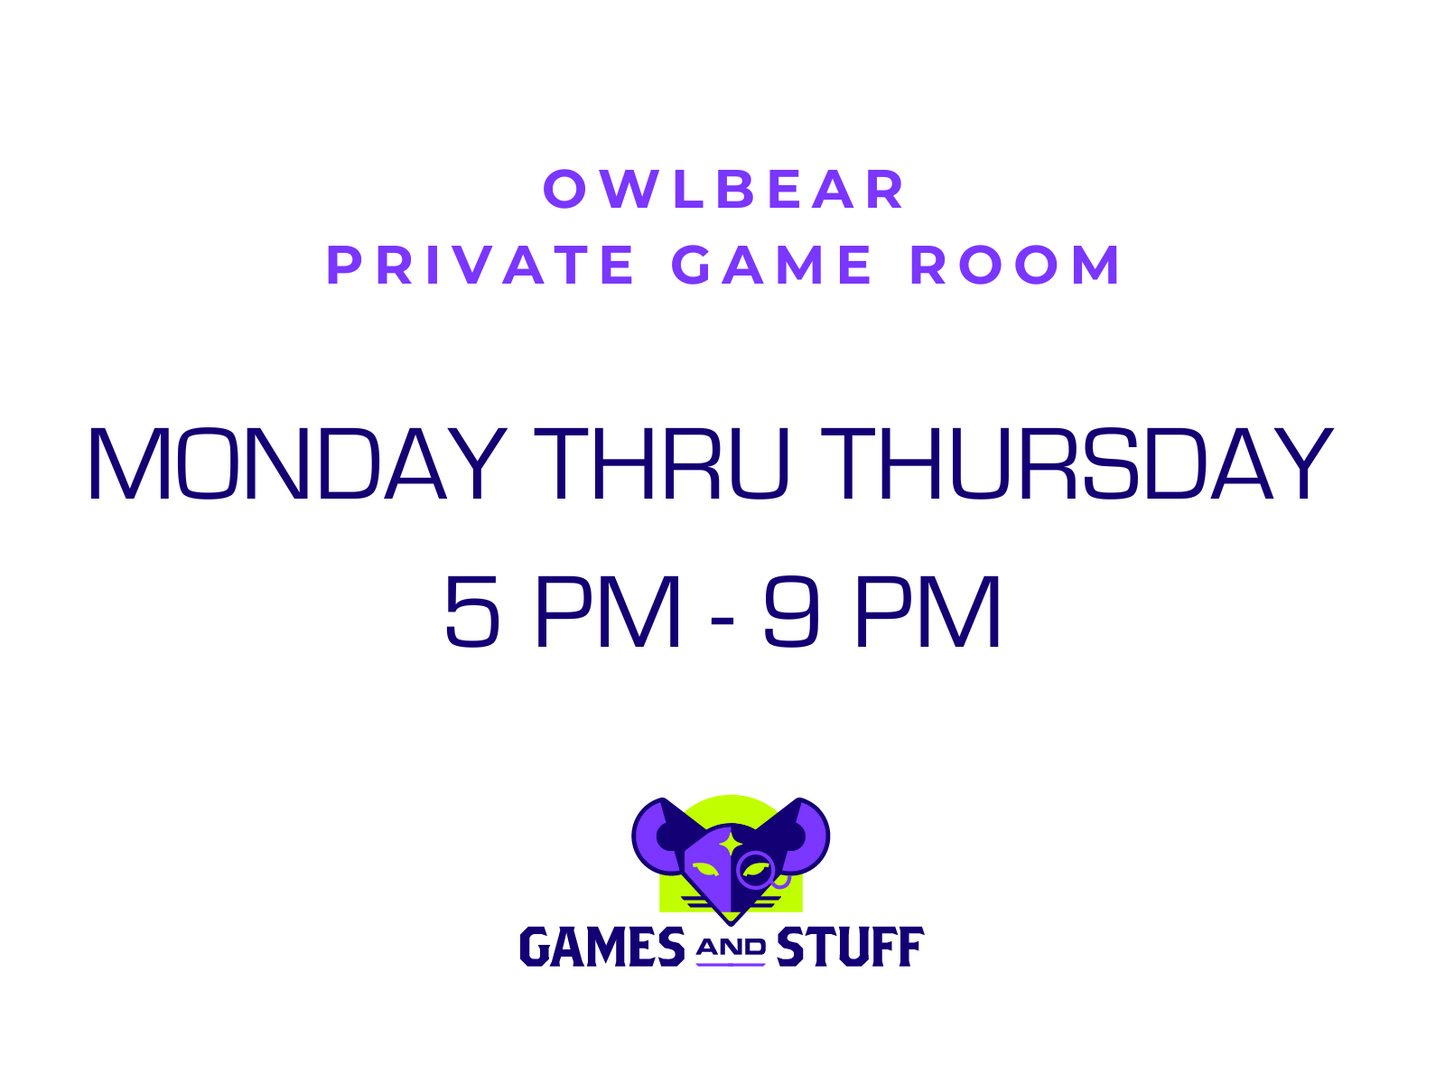 OWLBEAR PRIVATE GAME ROOM - MONDAY THRU THURSDAY EVENING